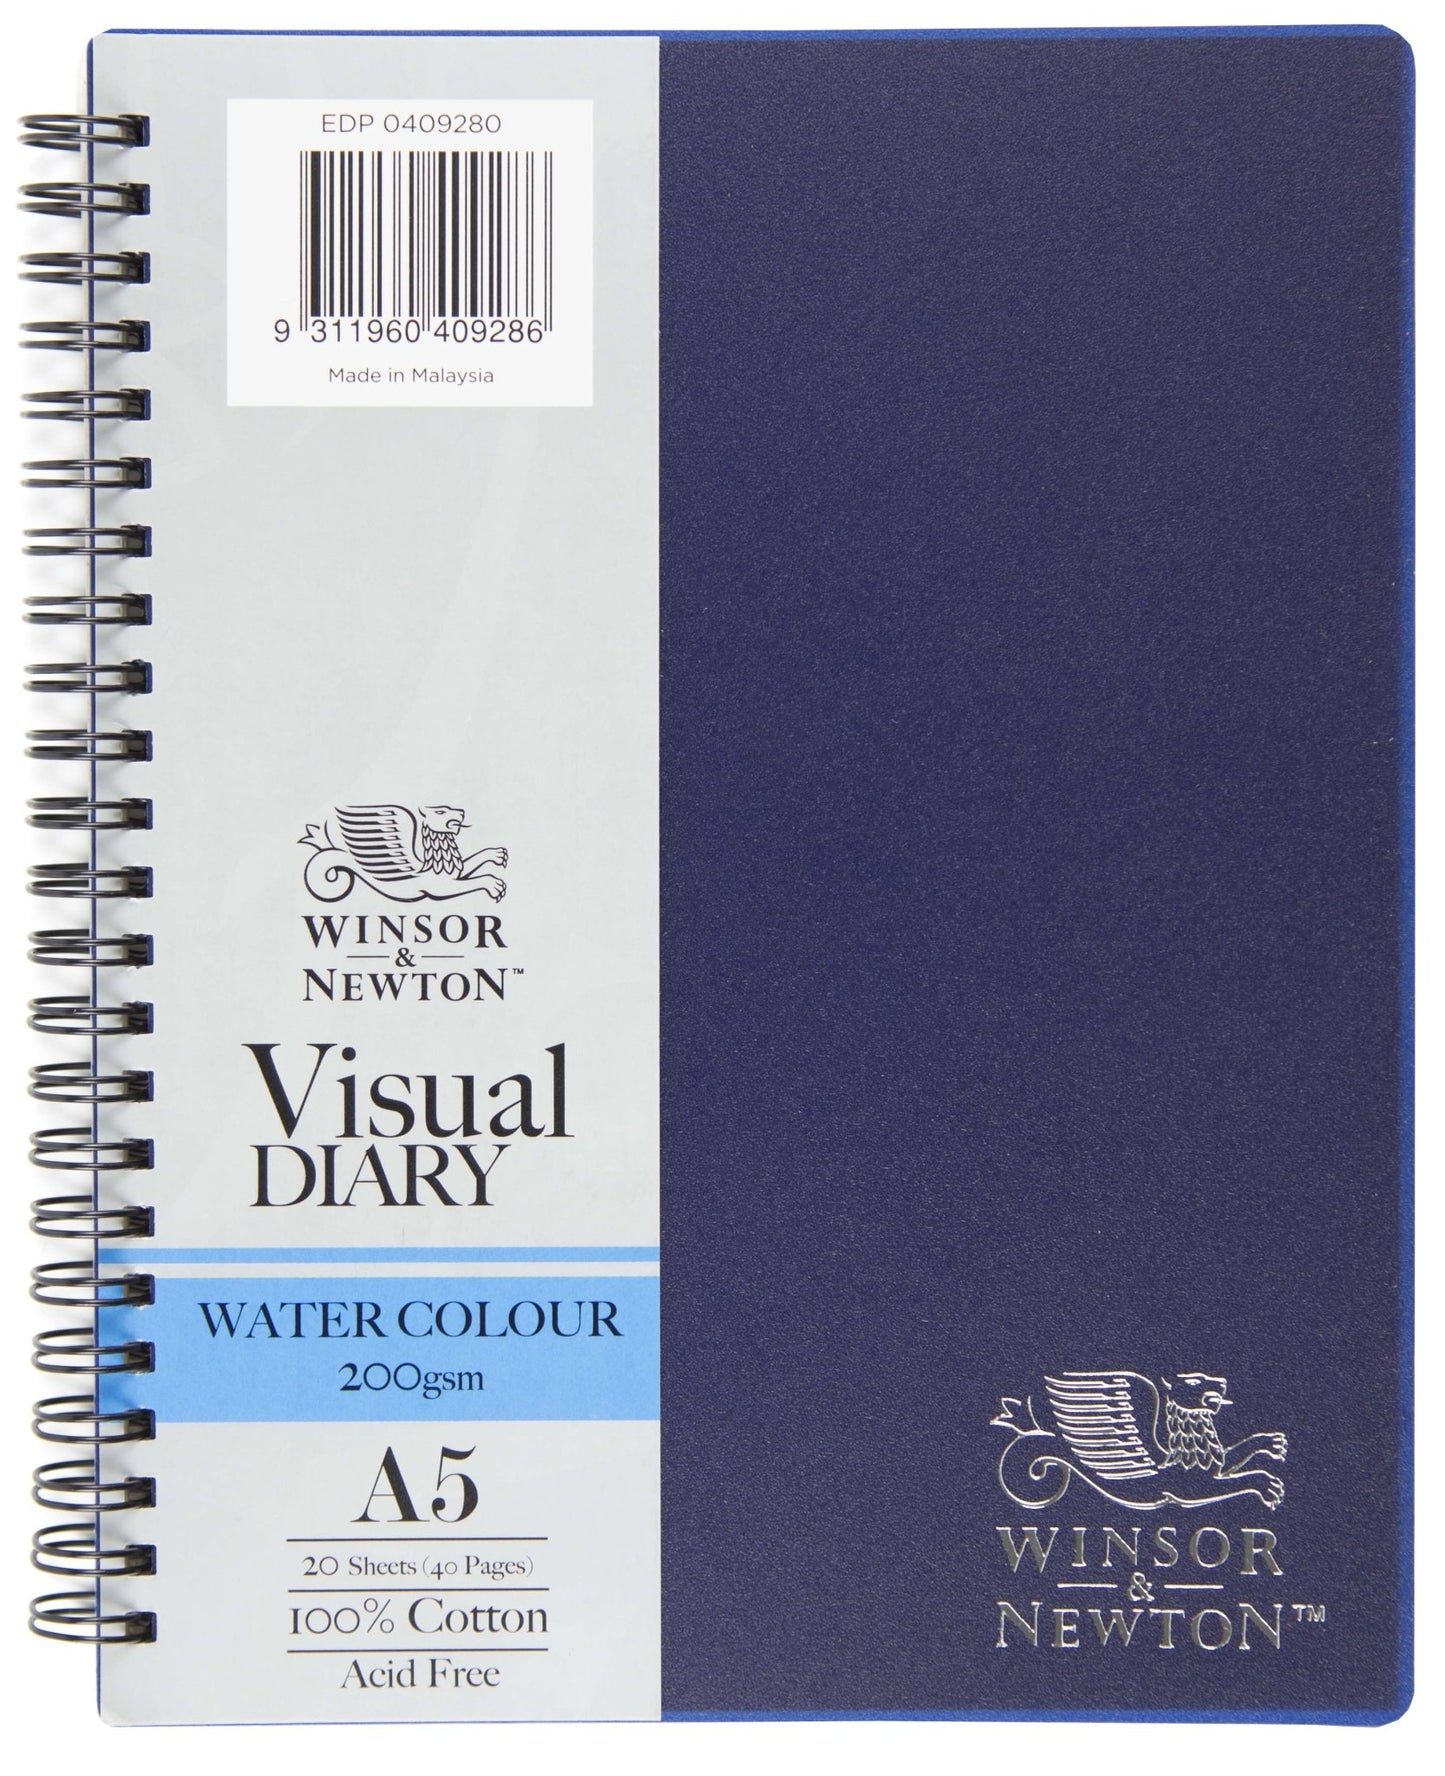 W & N W/C Visual Diary A5 200gsm 20 Sheet - theartshop.com.au